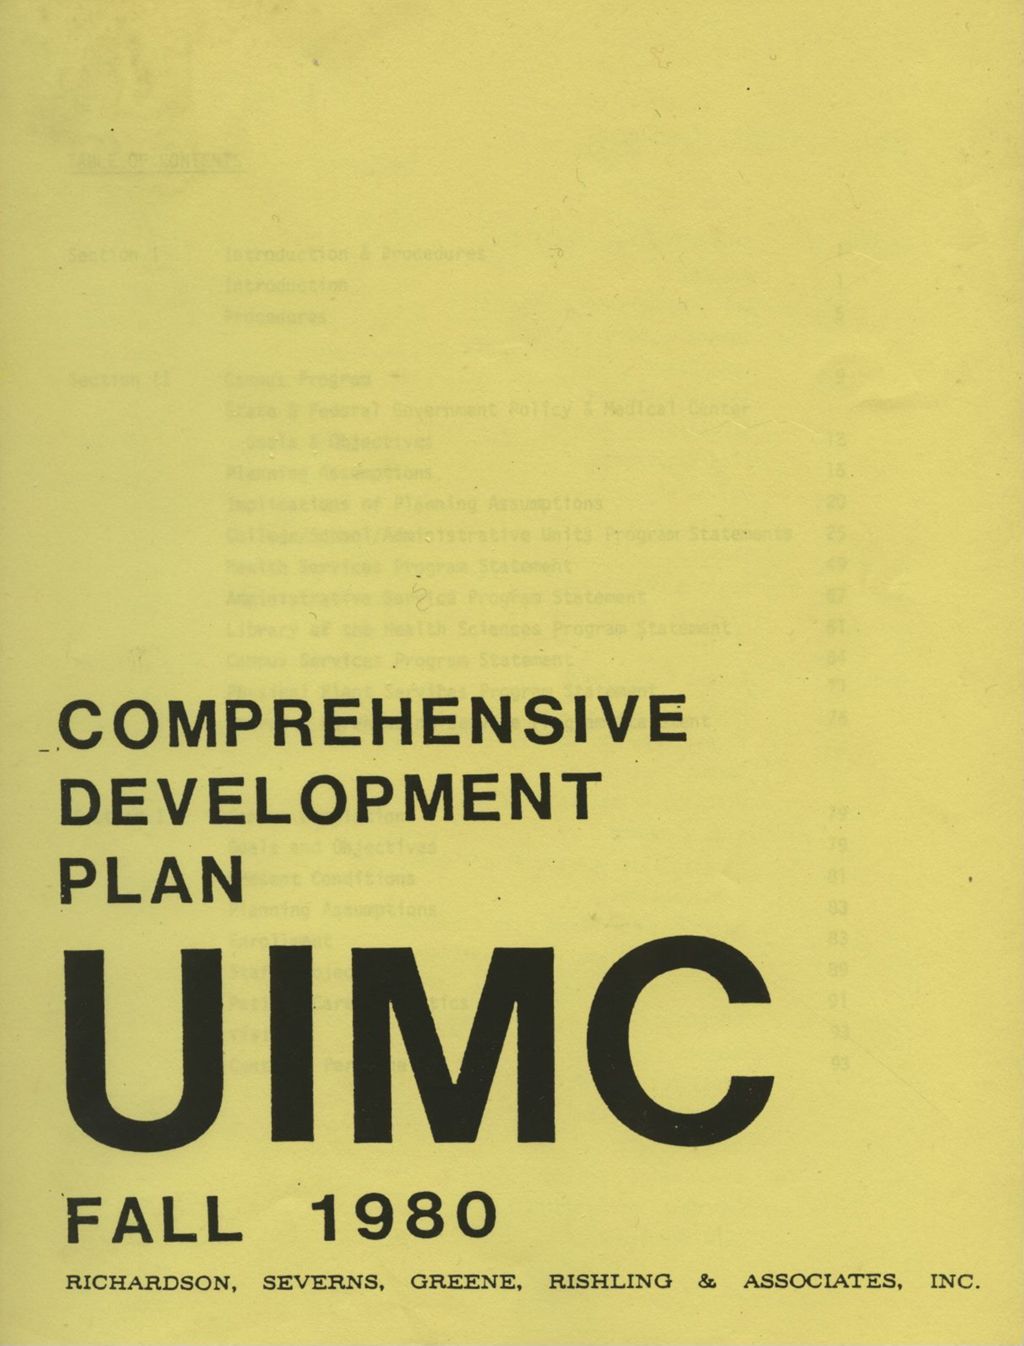 Comprehensive Development Plan UIMC (University of Illinois at the Medical Center)